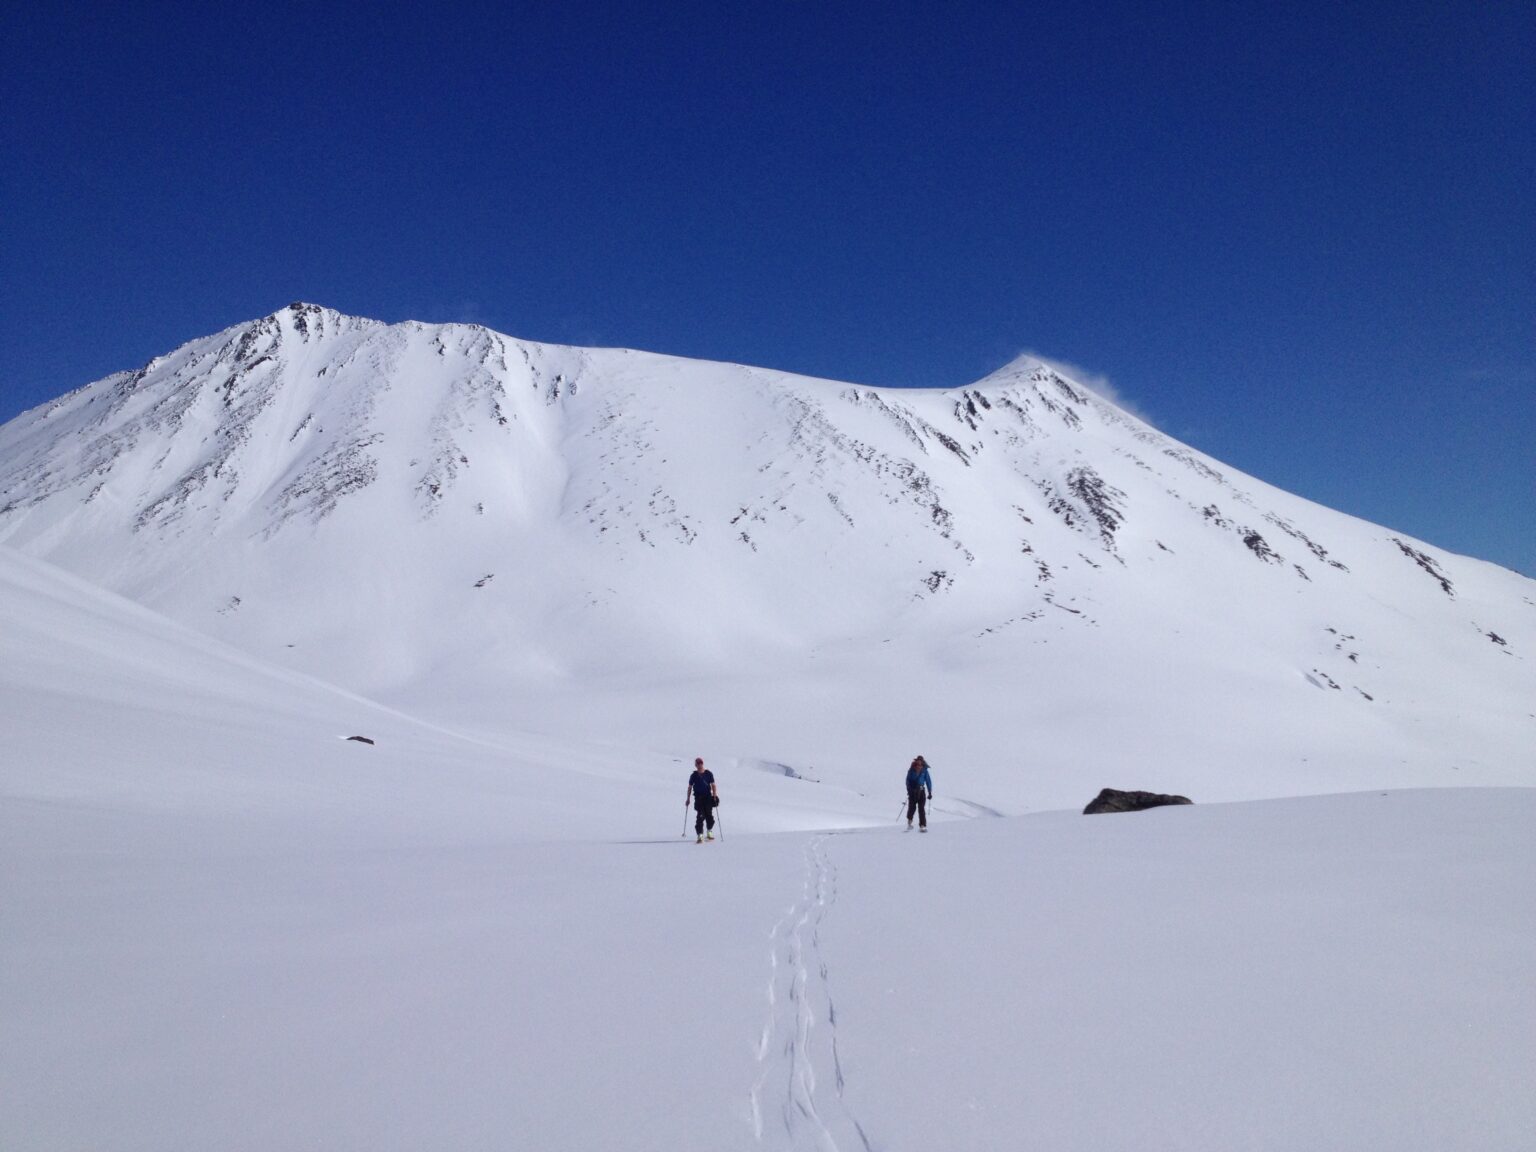 Ski touring up the Kvalvikdalen Valley